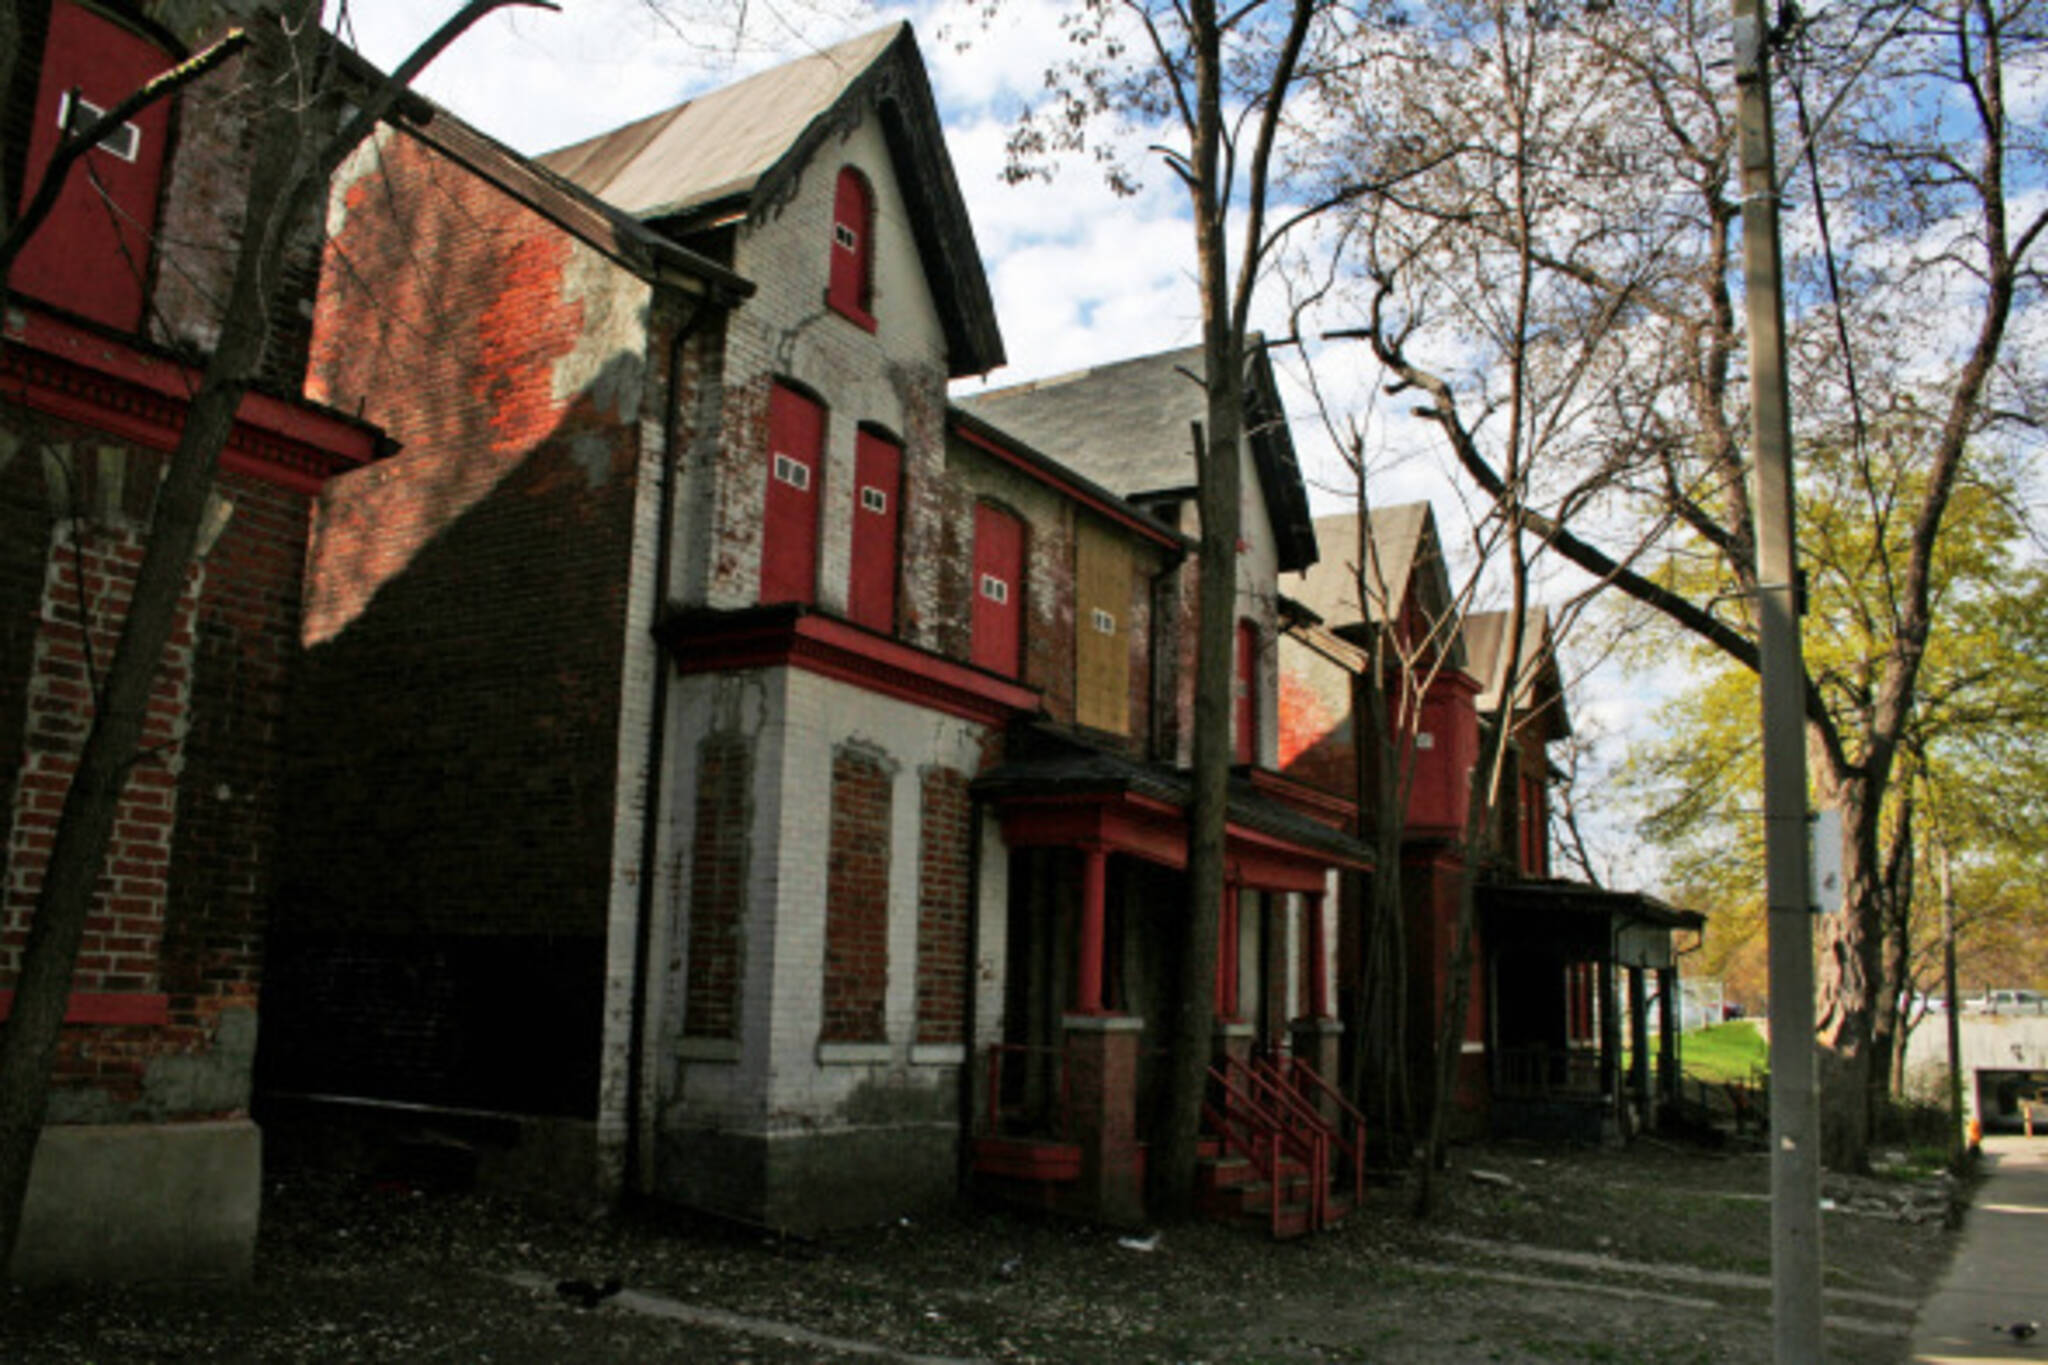 Abandoned Homes on Glen Road